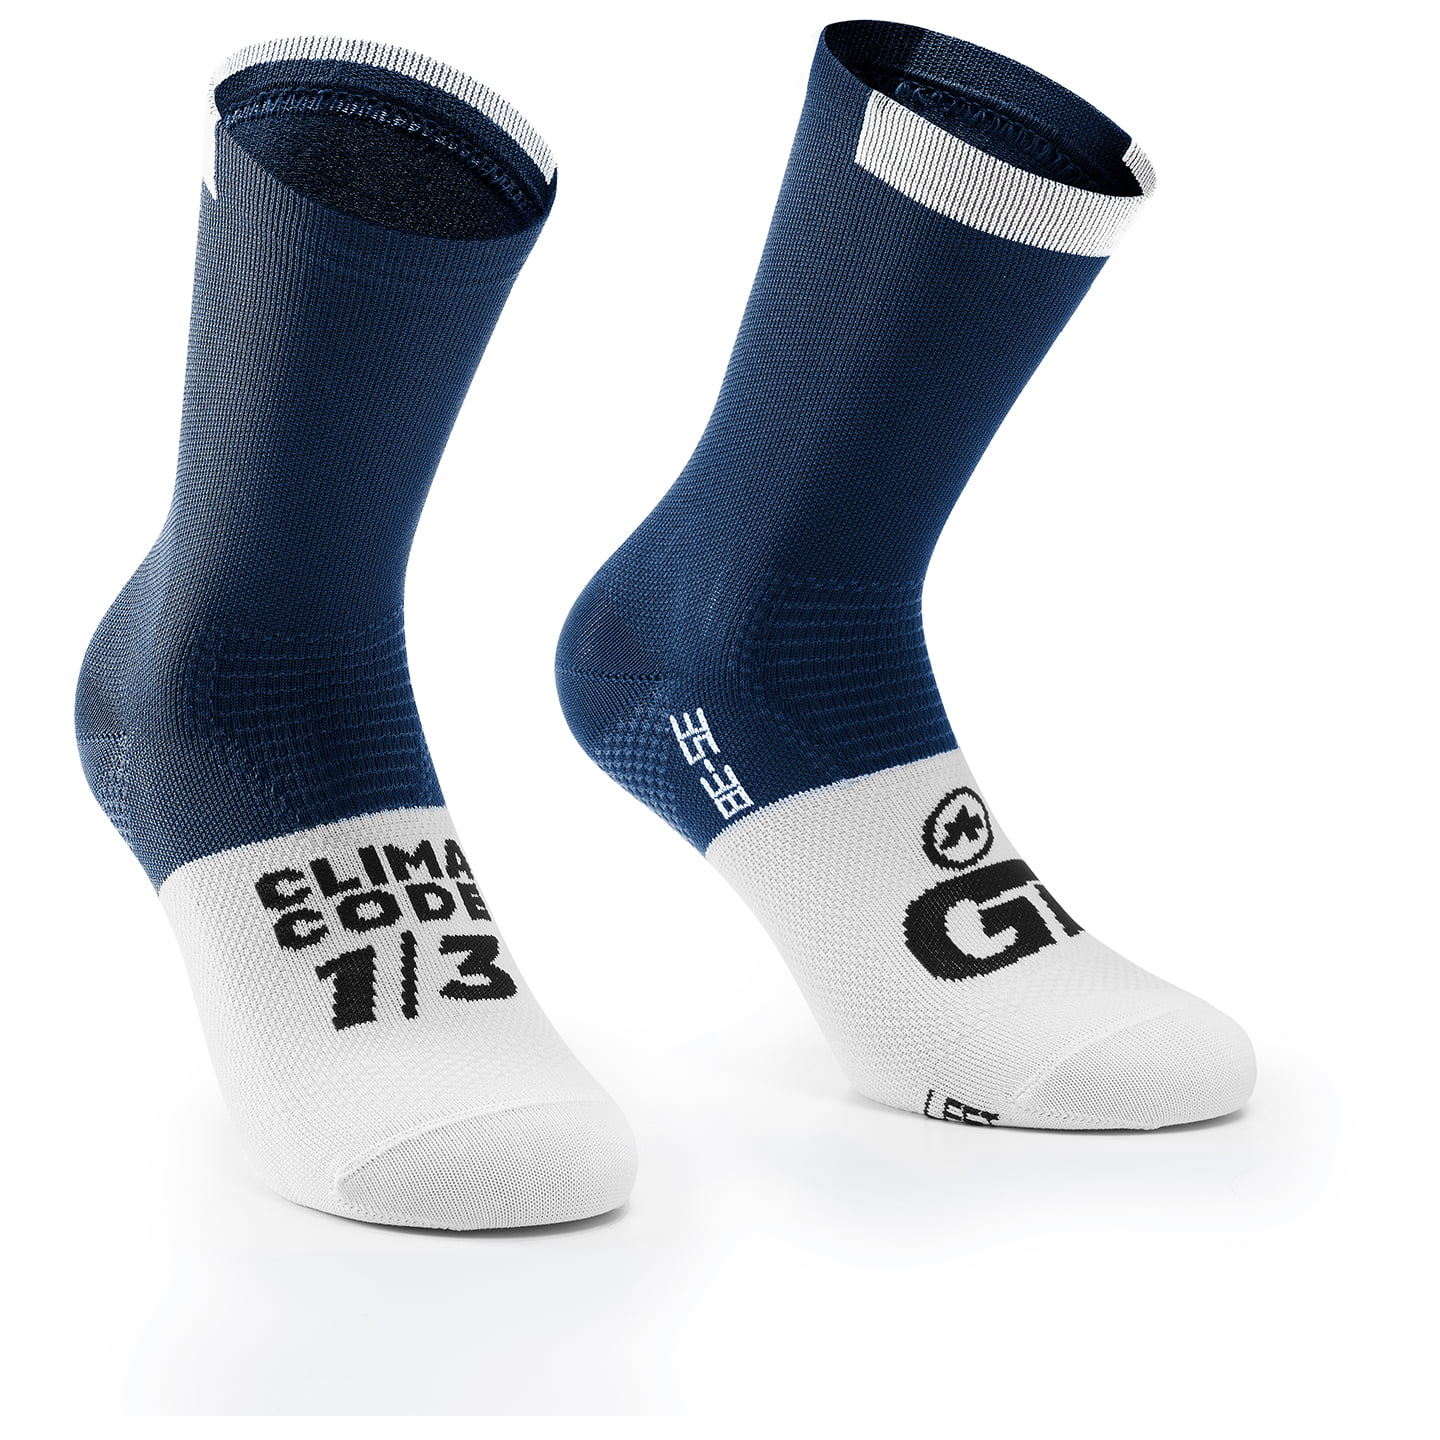 ASSOS Mille GT Cycling Socks, for men, size M-L, MTB socks, Cycling clothing